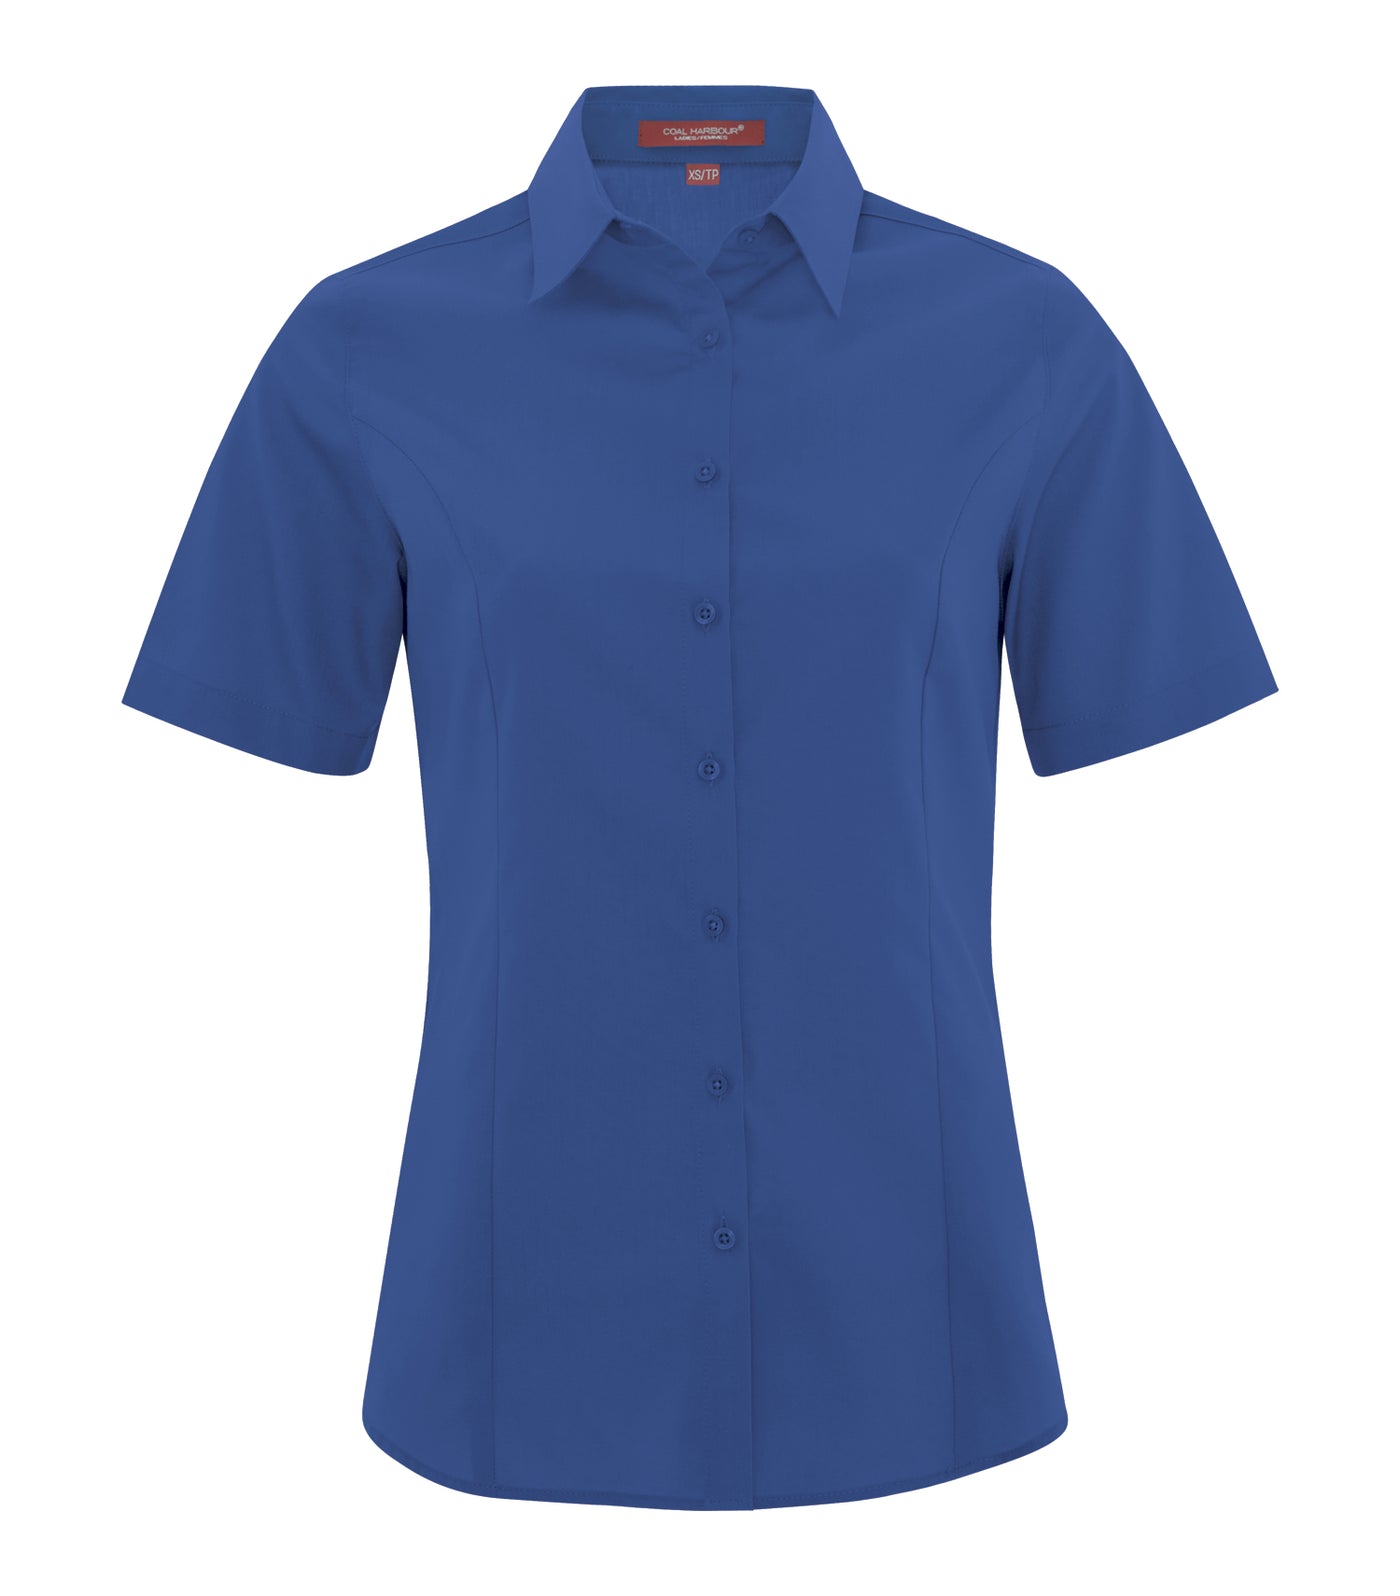 True Royal - Coal Harbour Women's Short Sleeve Work Shirt